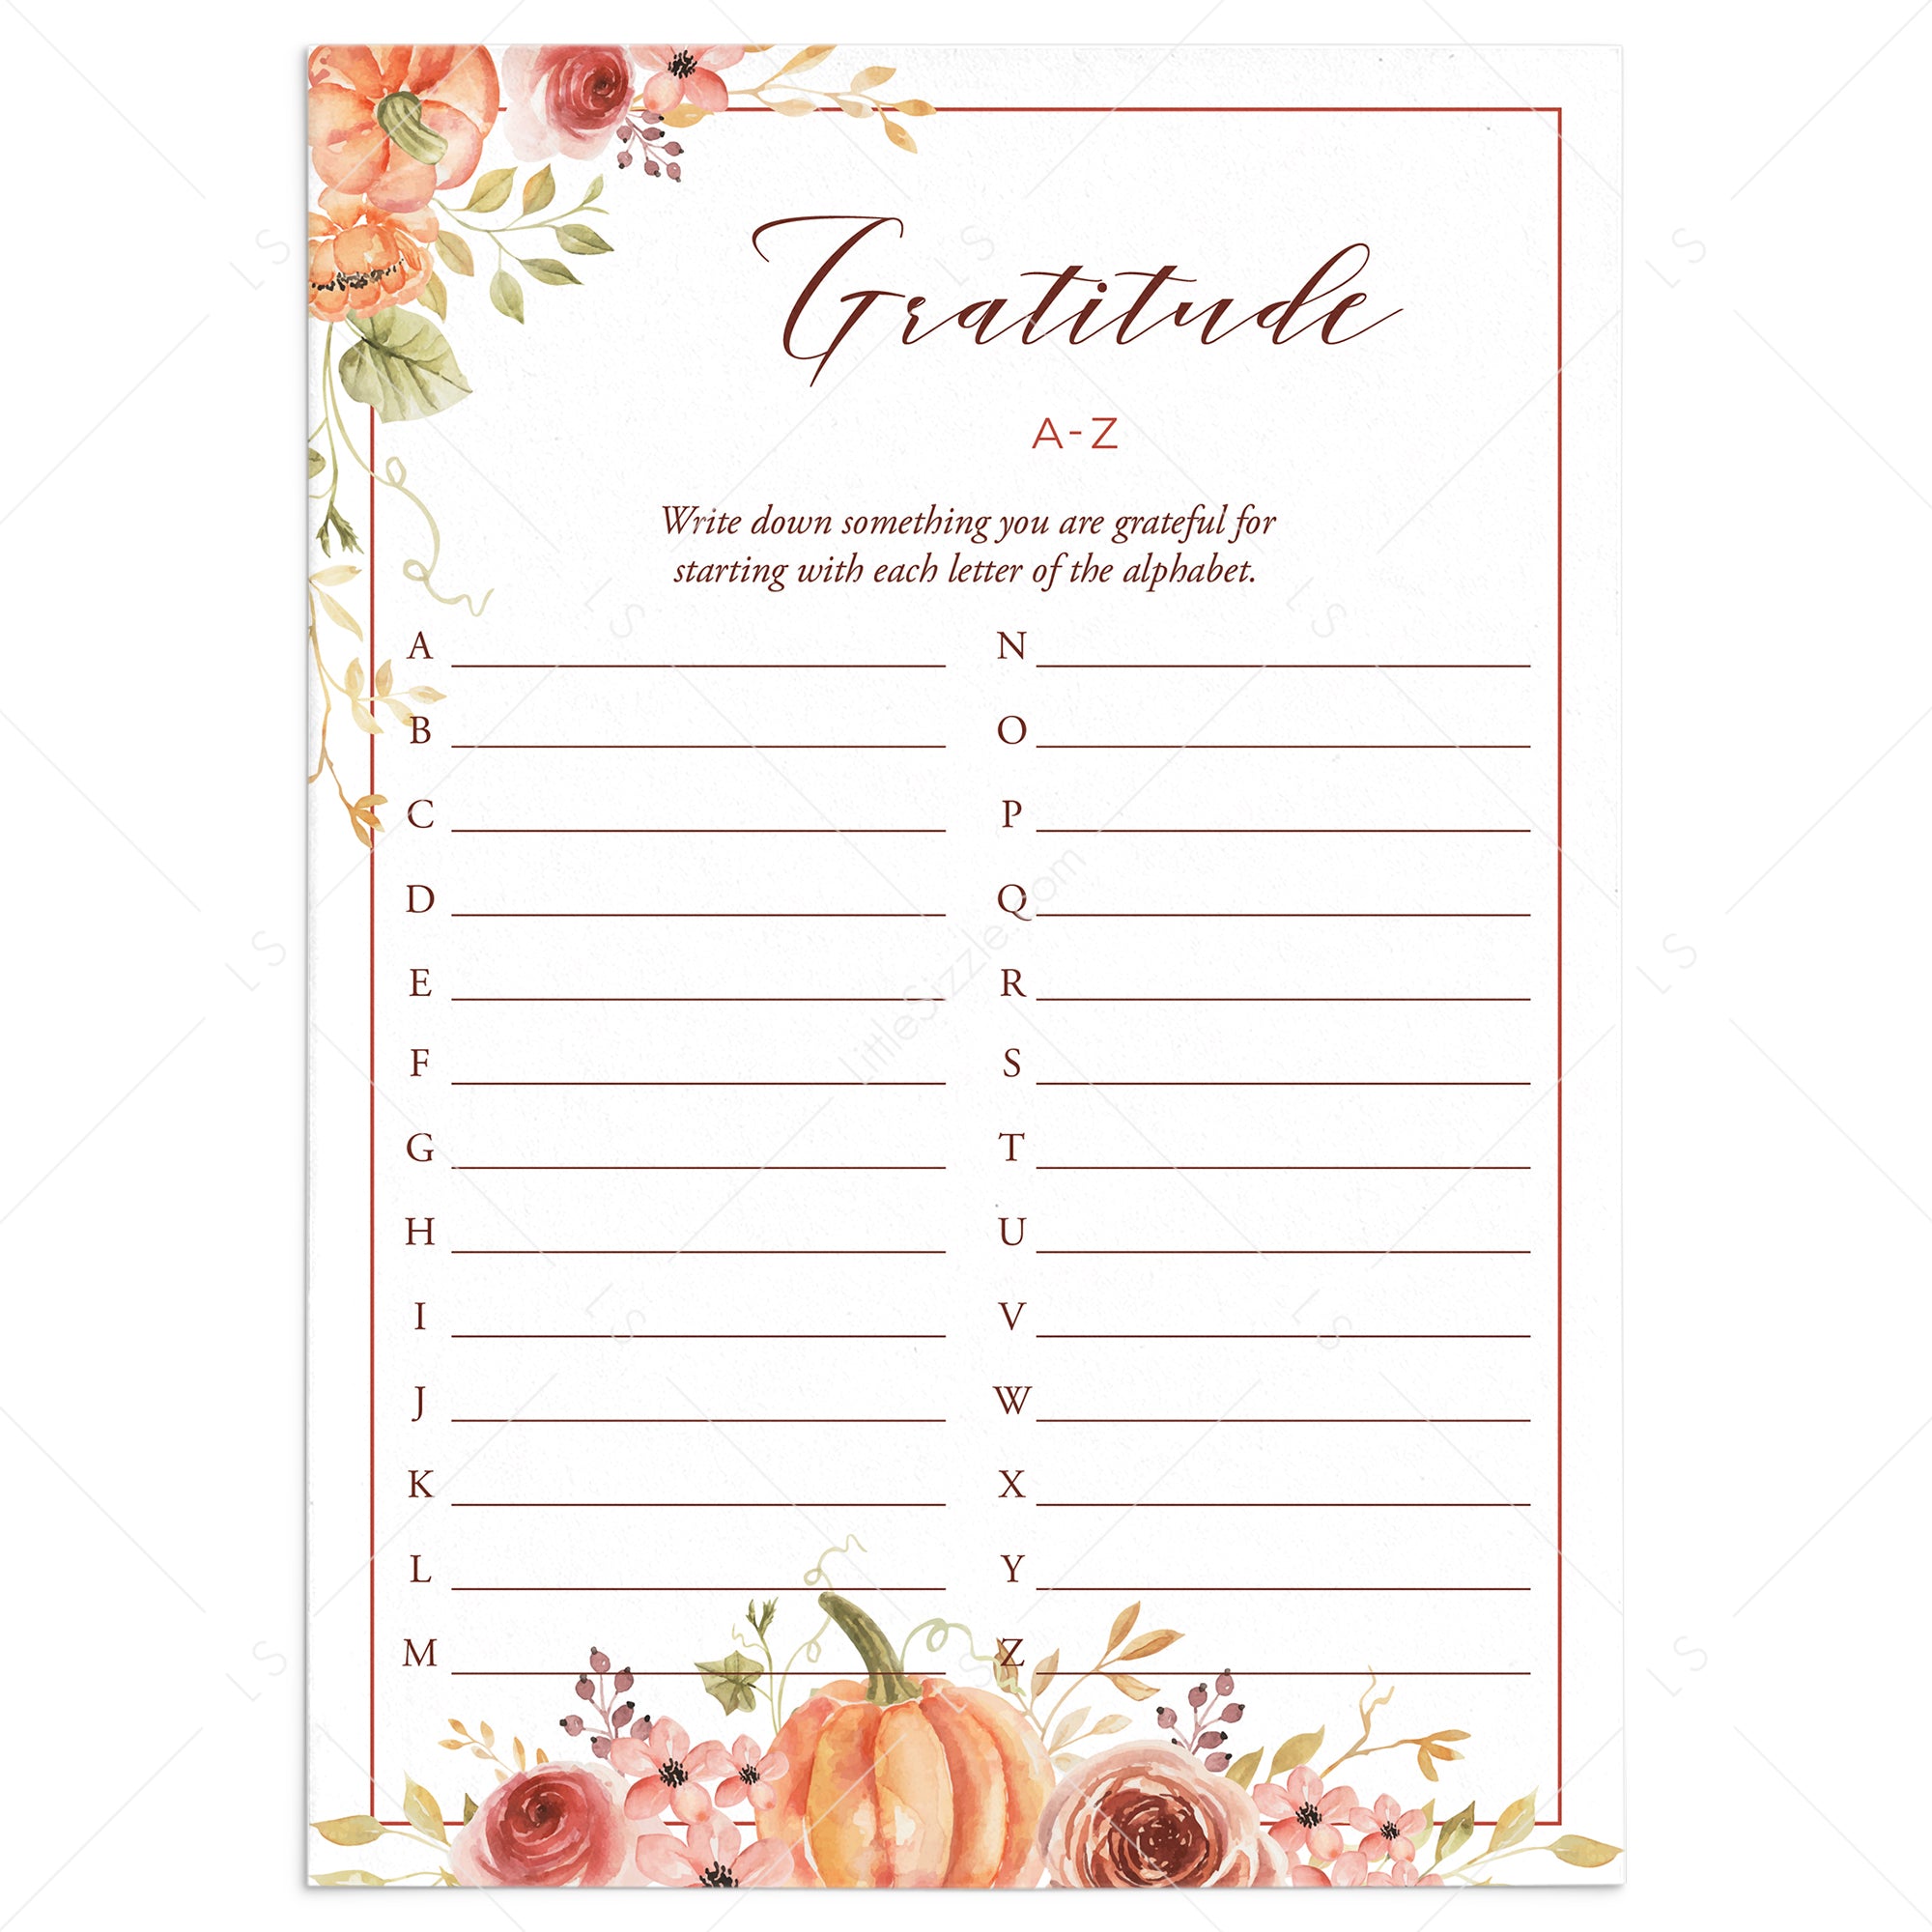 Watercolor Floral Pumpkin Gratitude List Printable by LittleSizzle